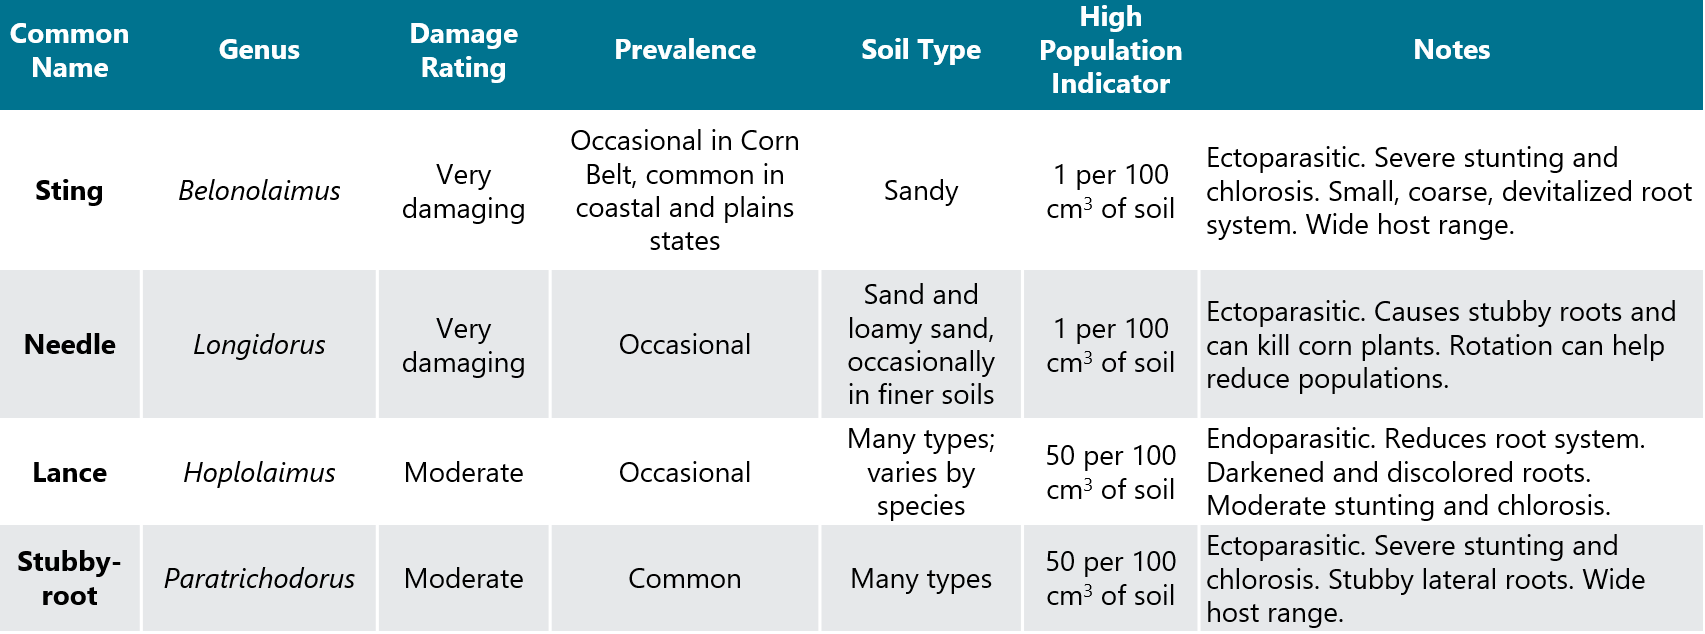 Table - Corn nematodes of economic importance in North American corn production.